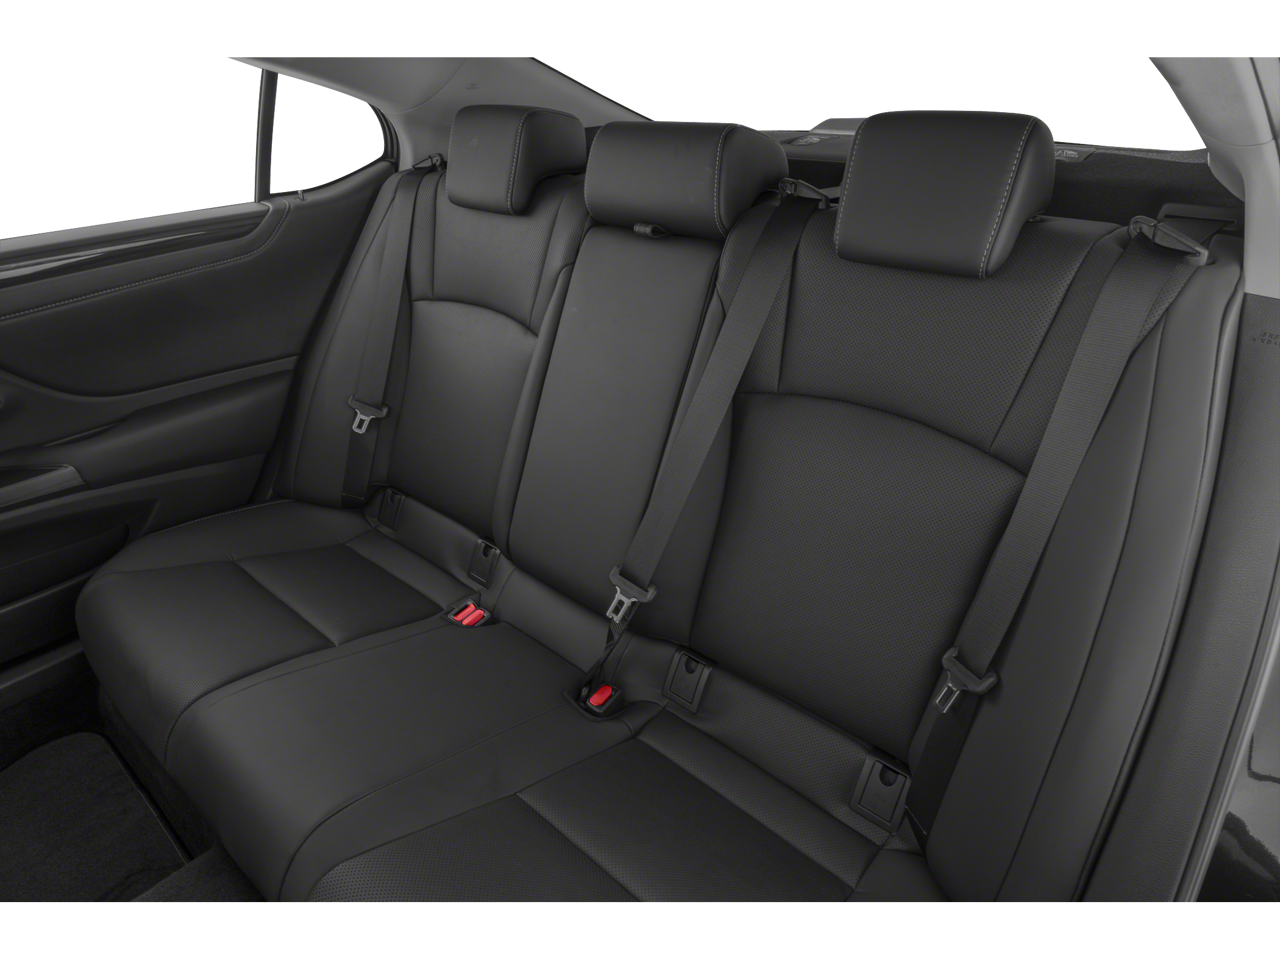 2021 Lexus ES 250 w/Nav, Carplay, Android, Moonroof, Loaded!